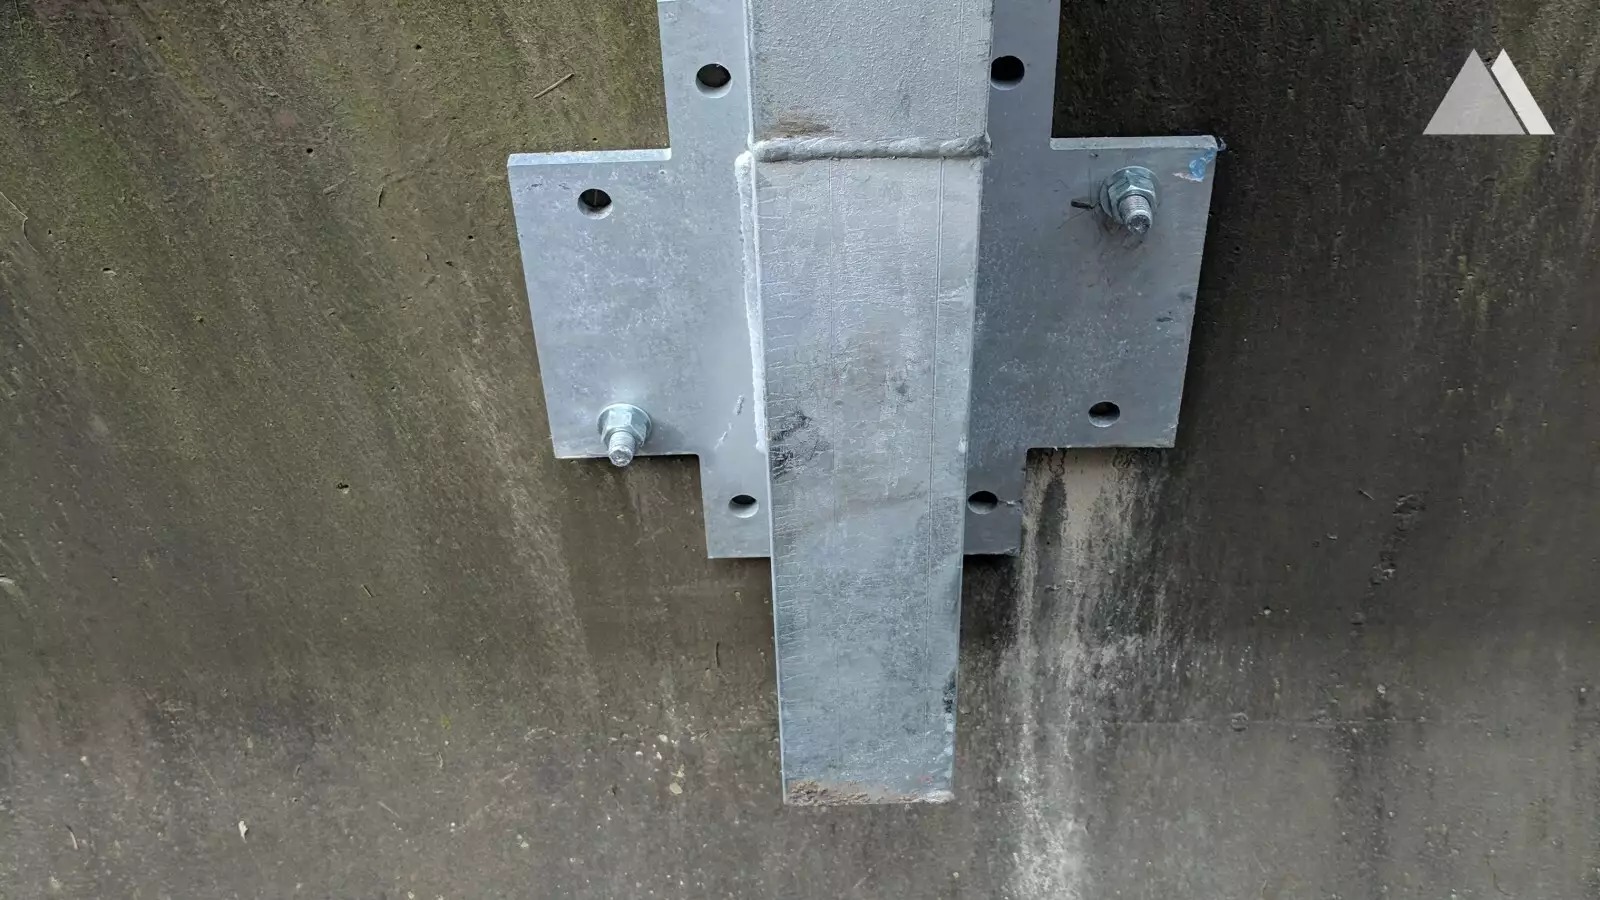 Protección contra caídas de rocas - Moffet Creek, Oregon, T35 barrier on concrete guardrail 2018